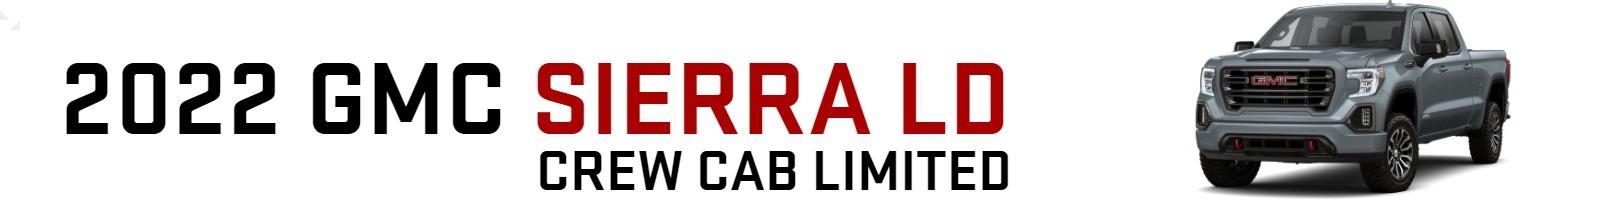 2022 GMC Sierra LD Crew Cab Limited